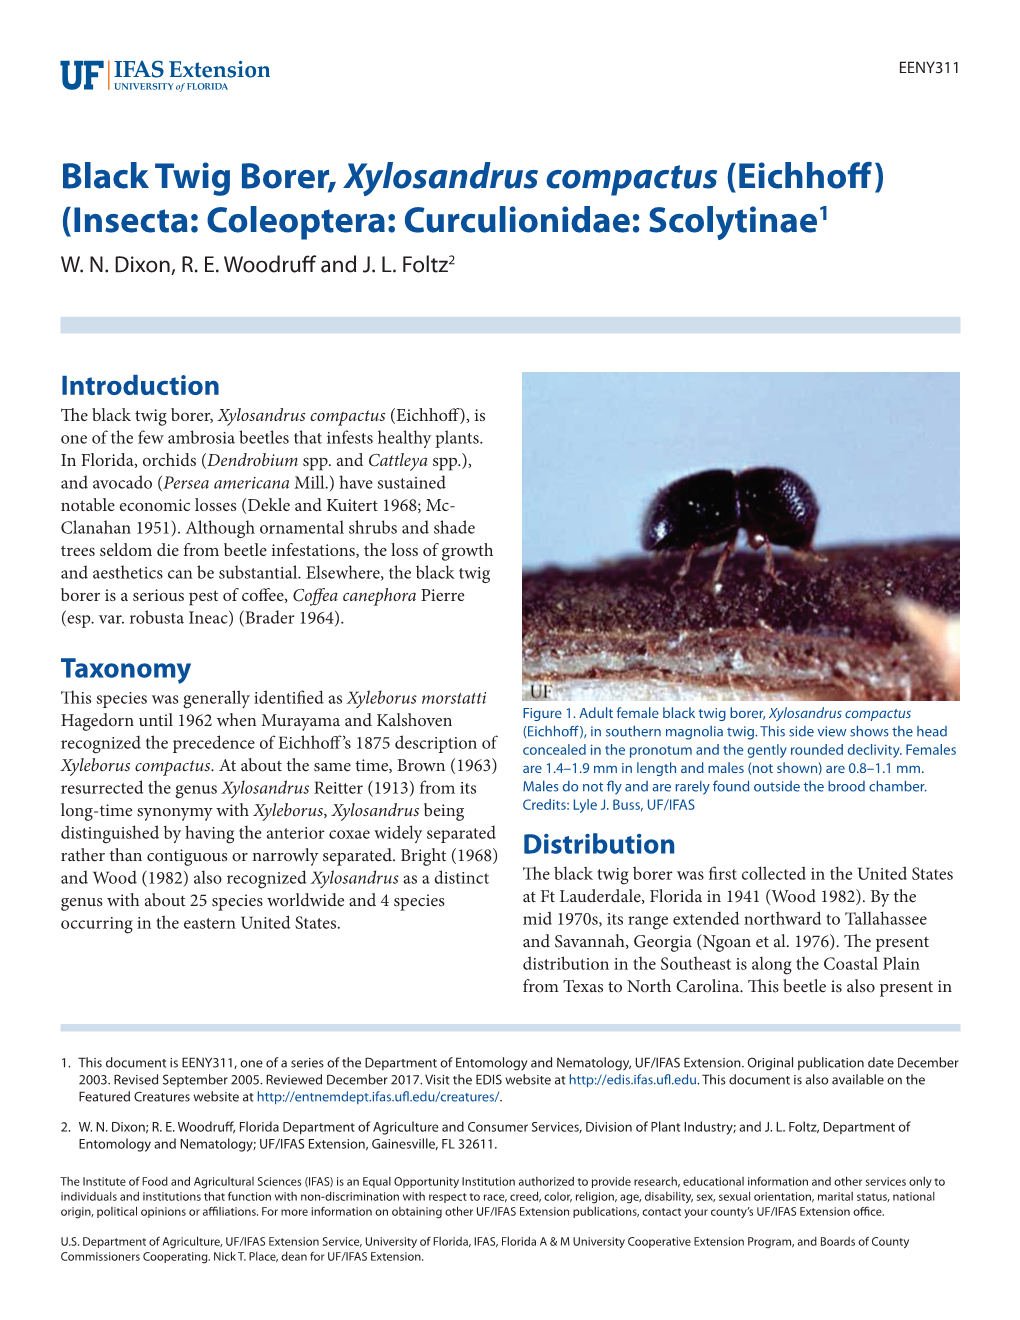 Black Twig Borer, Xylosandrus Compactus (Eichhoff) (Insecta: Coleoptera: Curculionidae: Scolytinae1 W